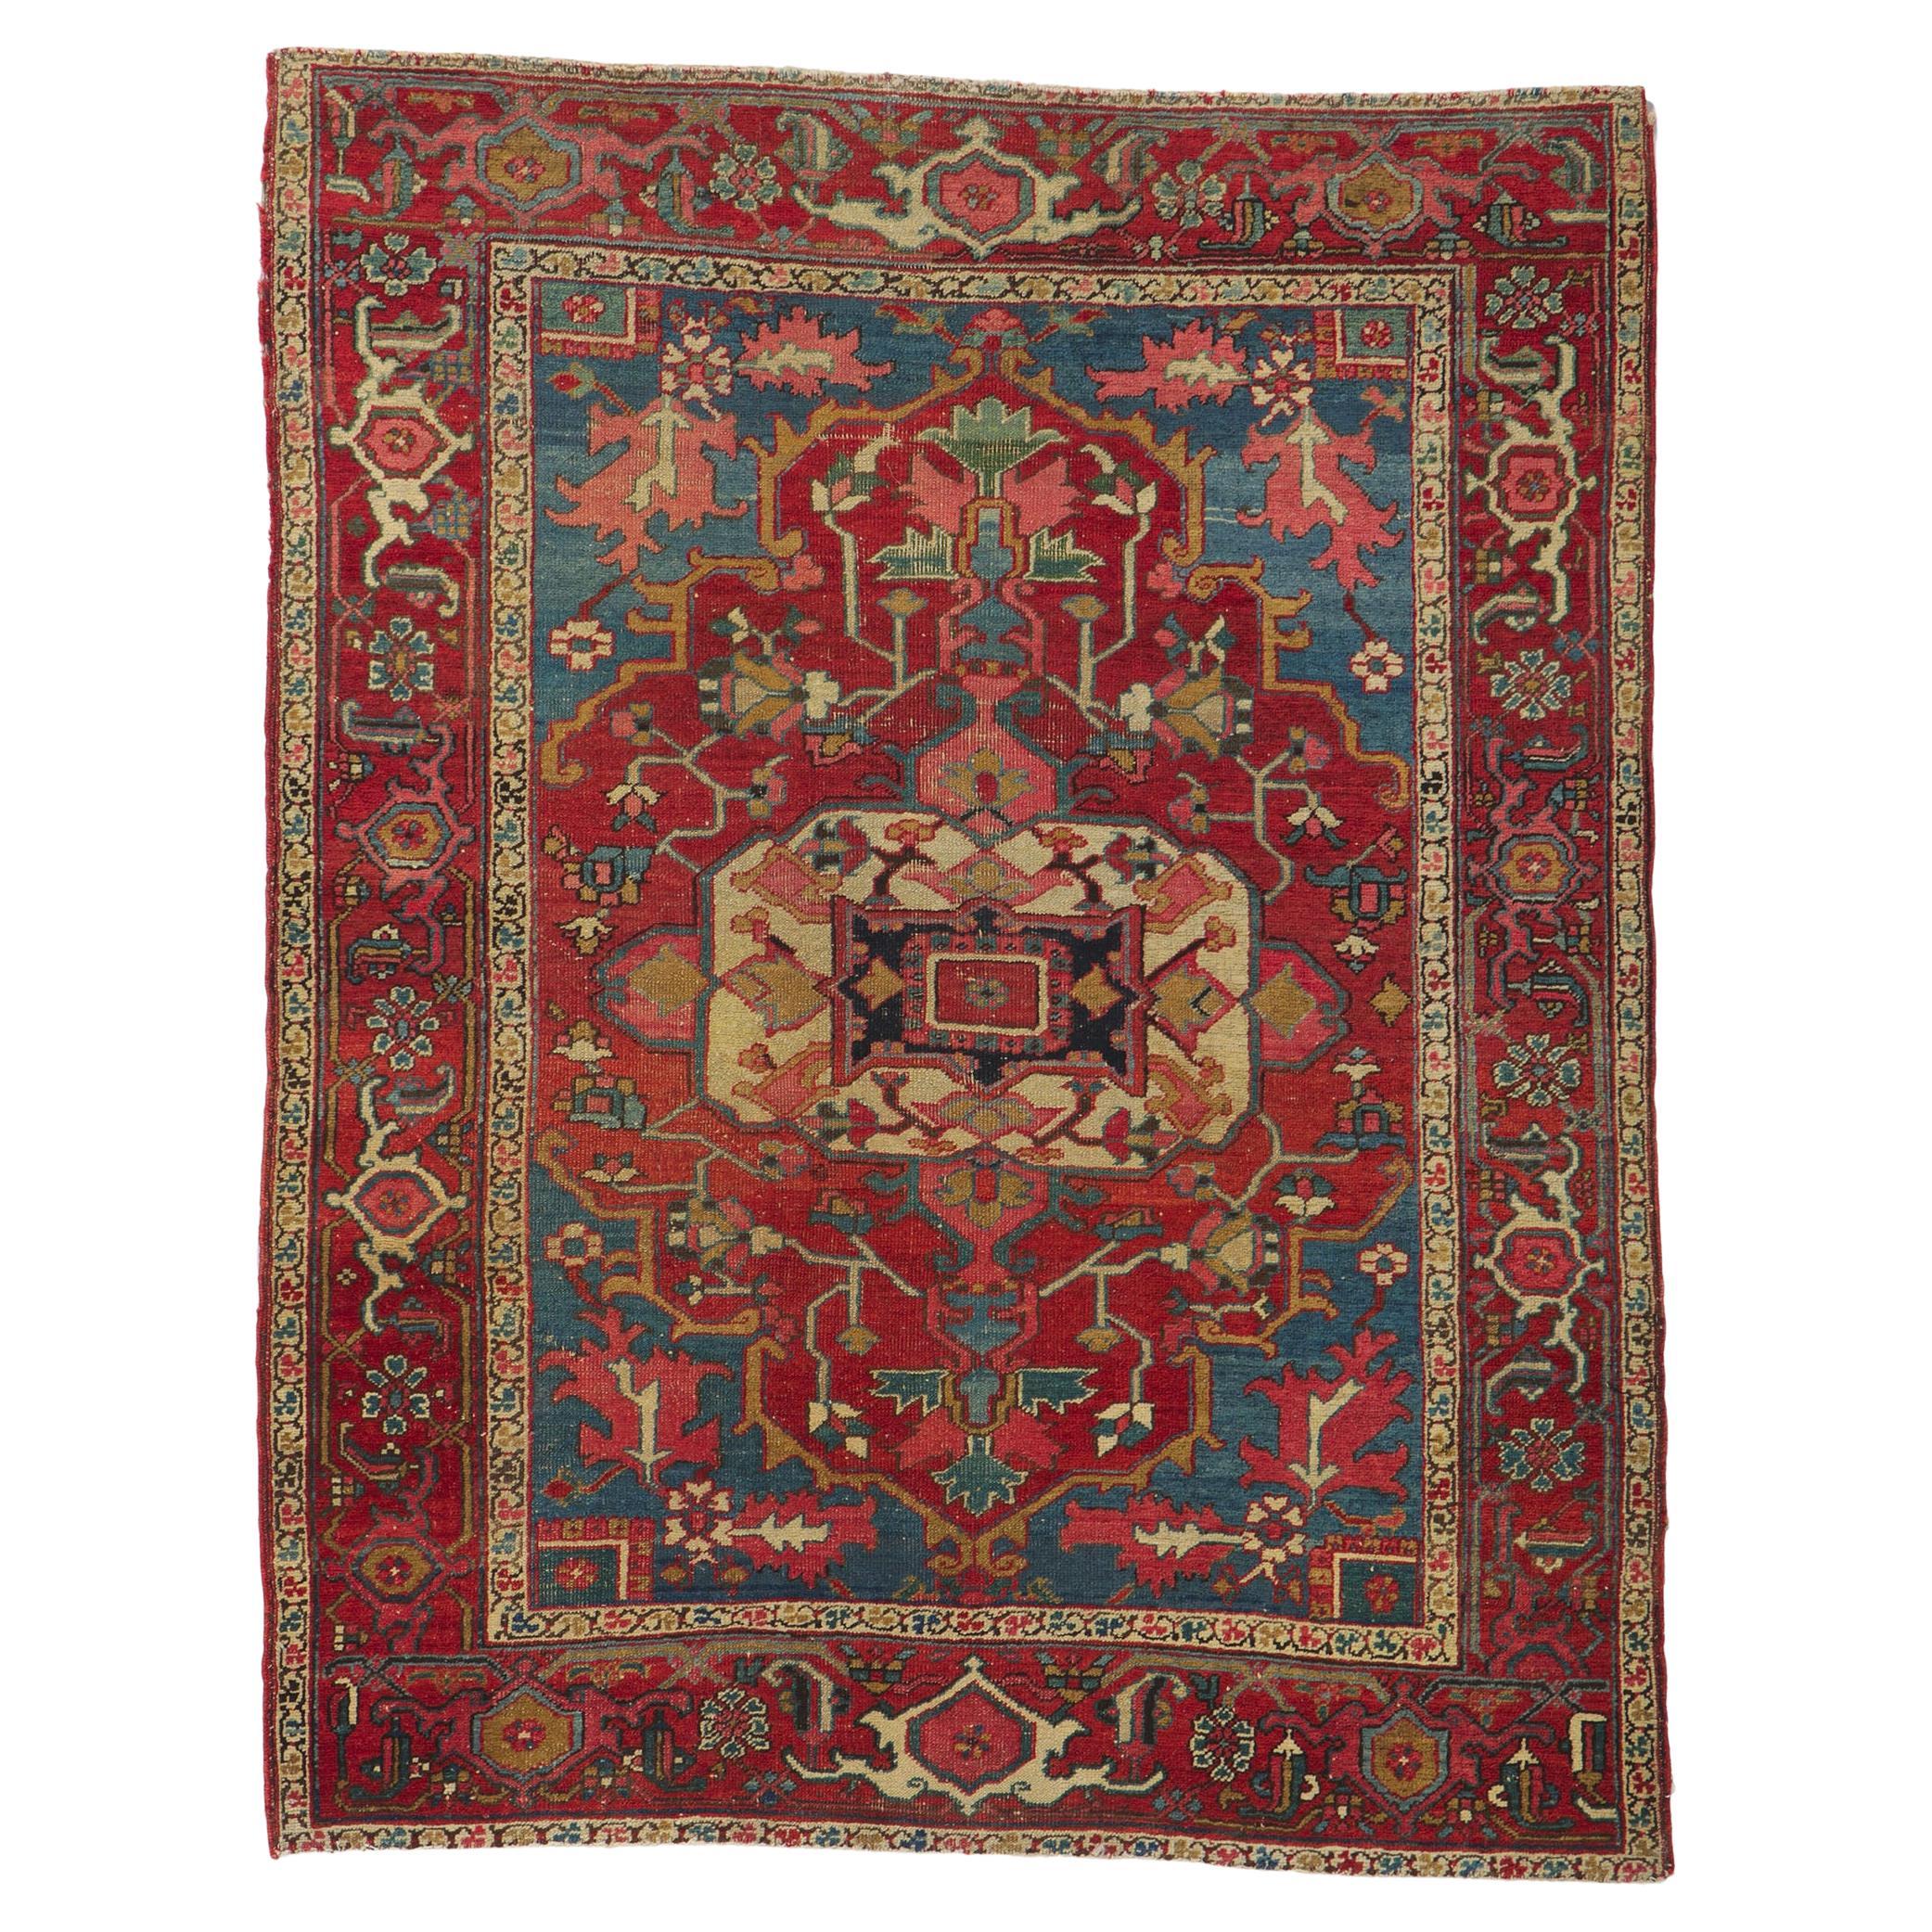 Antique Persian Serapi Rug, Timeless Elegance Meets Modern Style